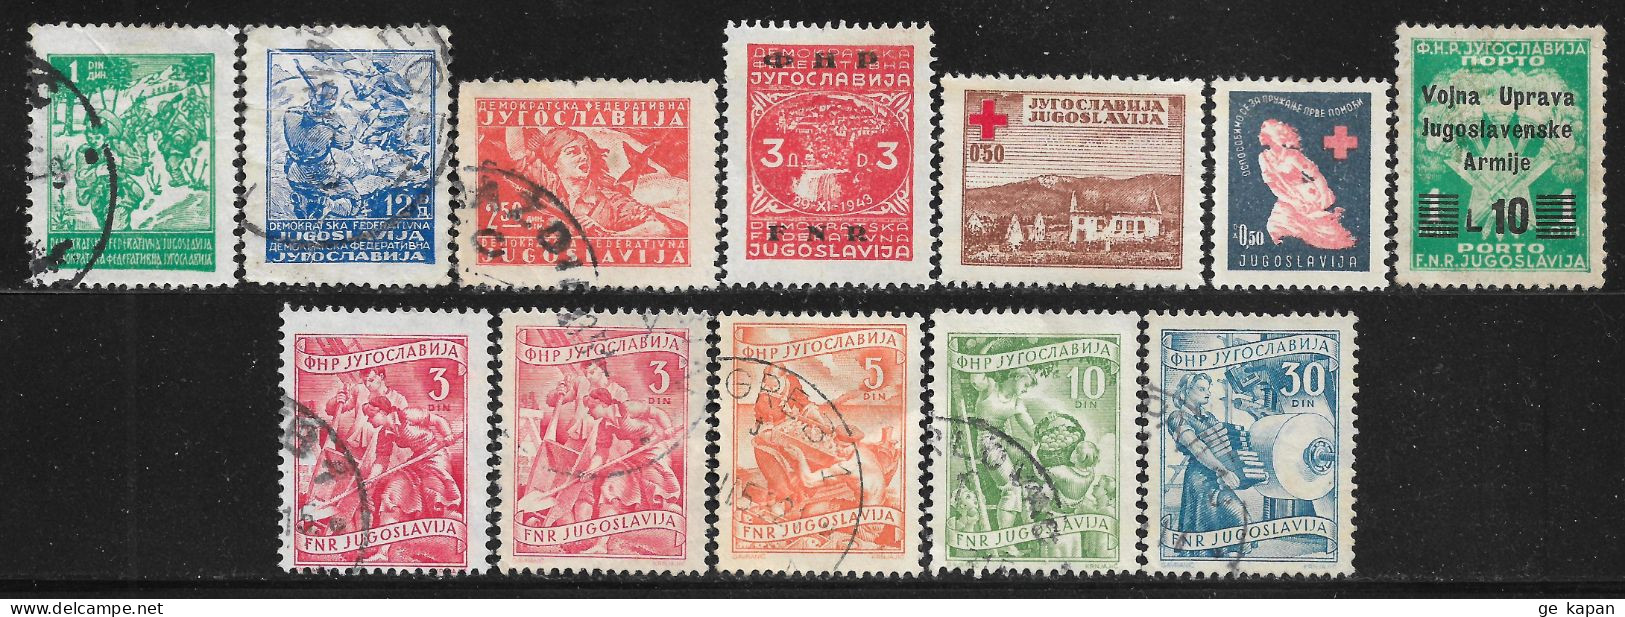 1945-1952 YUGOSLAVIA Set Of 8 Used + 4 MLH Stamps (Scott # 174,182,211,277,RA5,RA6,J23,308,345,346,350) CV $3.00 - Usati